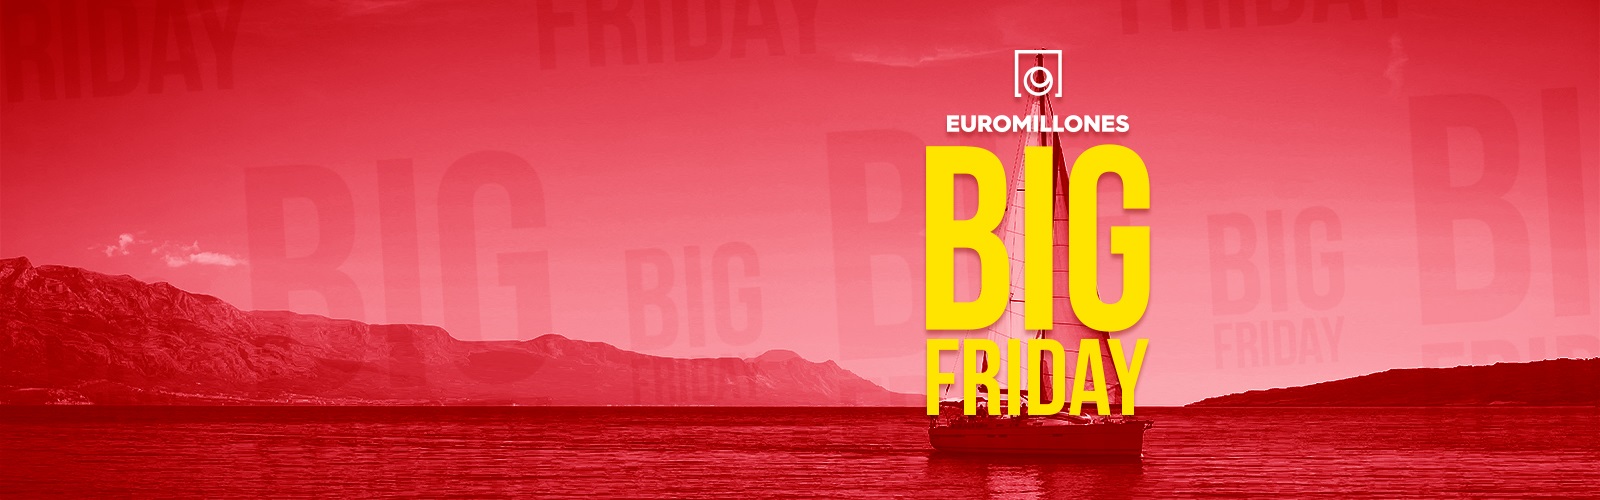 130 millones en el Big Friday Euromillones 2018